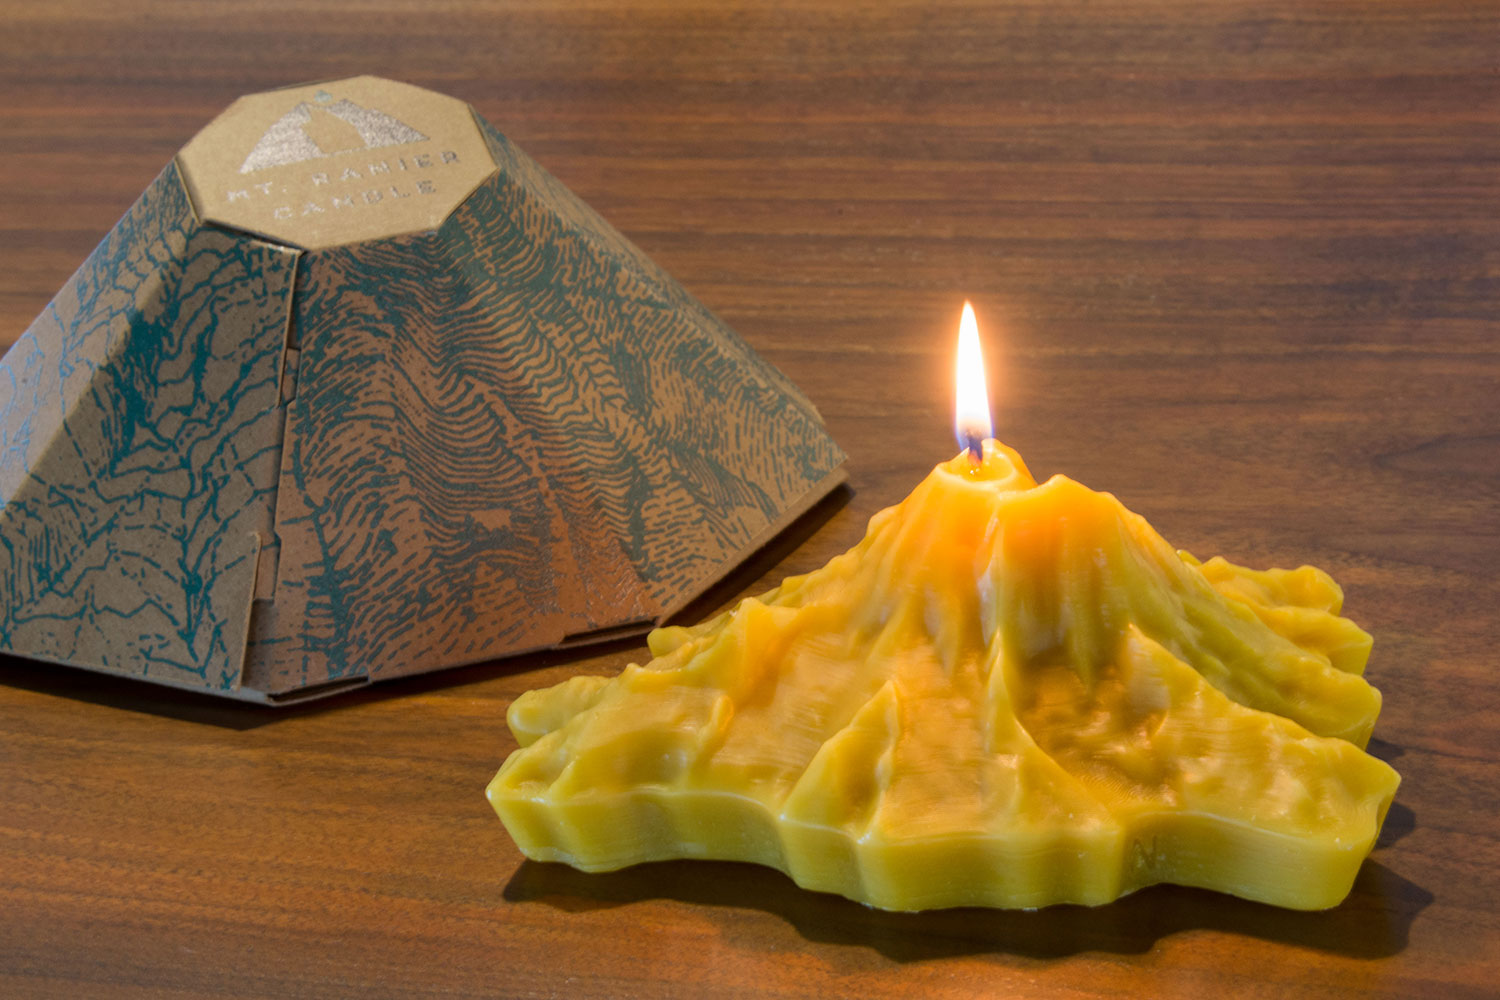 cascadia candle company kickstarter interview brad swift mountain candles rainiercubox